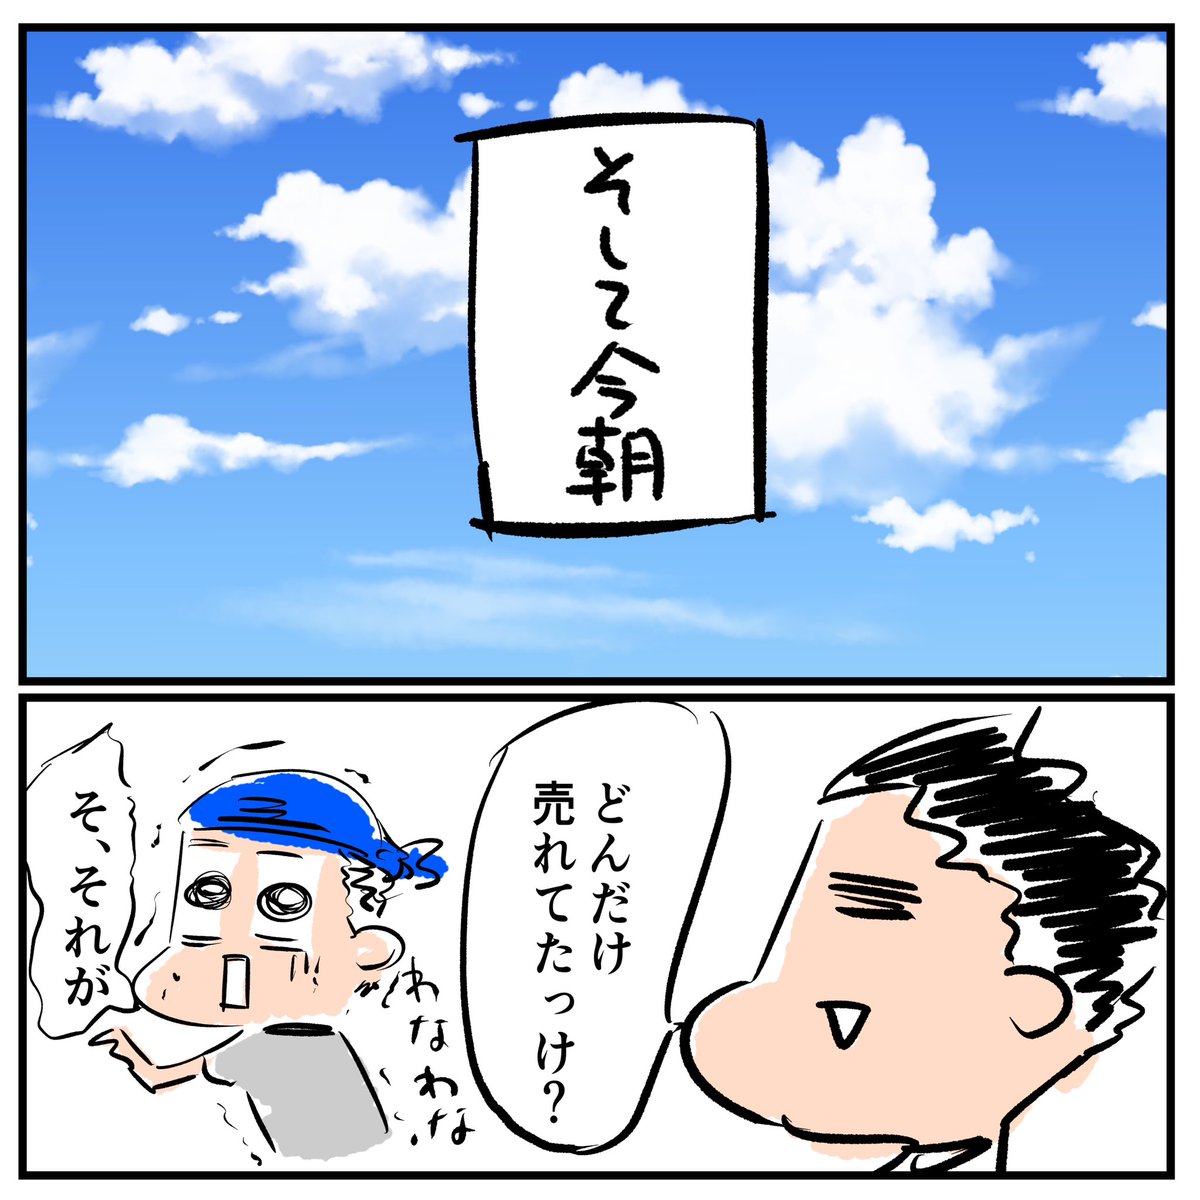 udon_katatumuri tweet picture